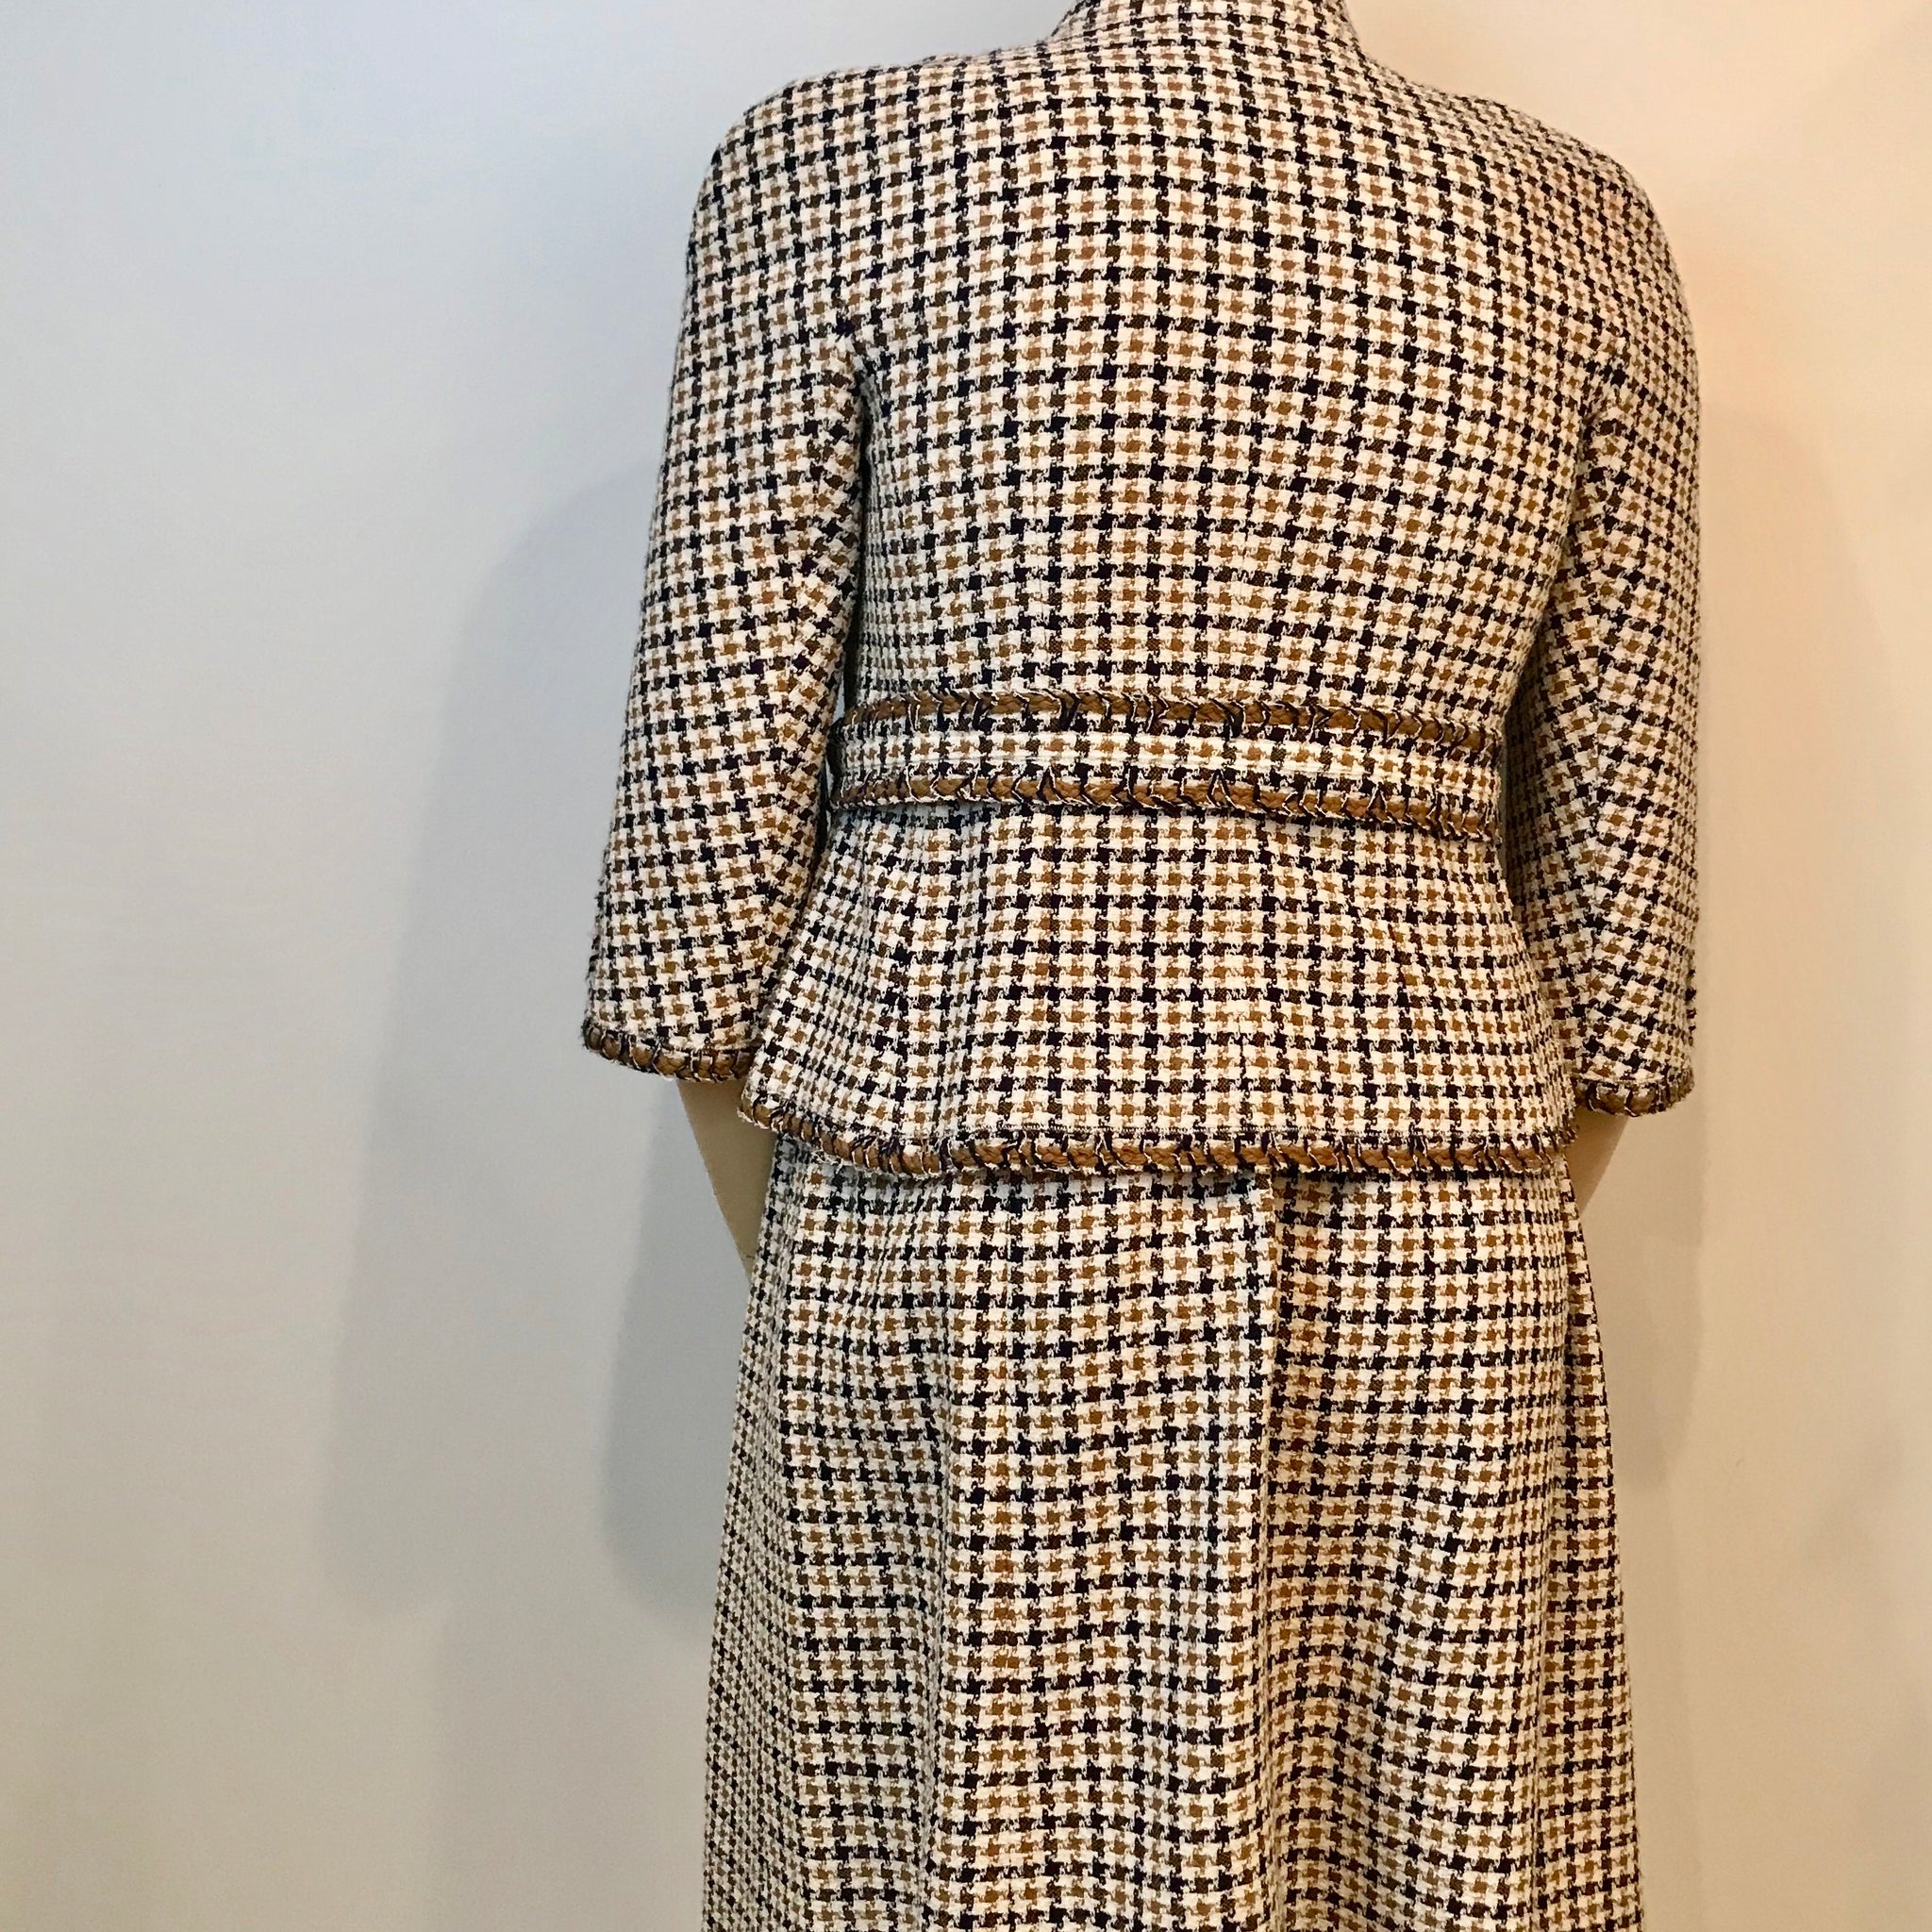  RIHOAS Women's Elegant Suit Jacket Coat and Skirt Set(Black-23,Small)  : Clothing, Shoes & Jewelry